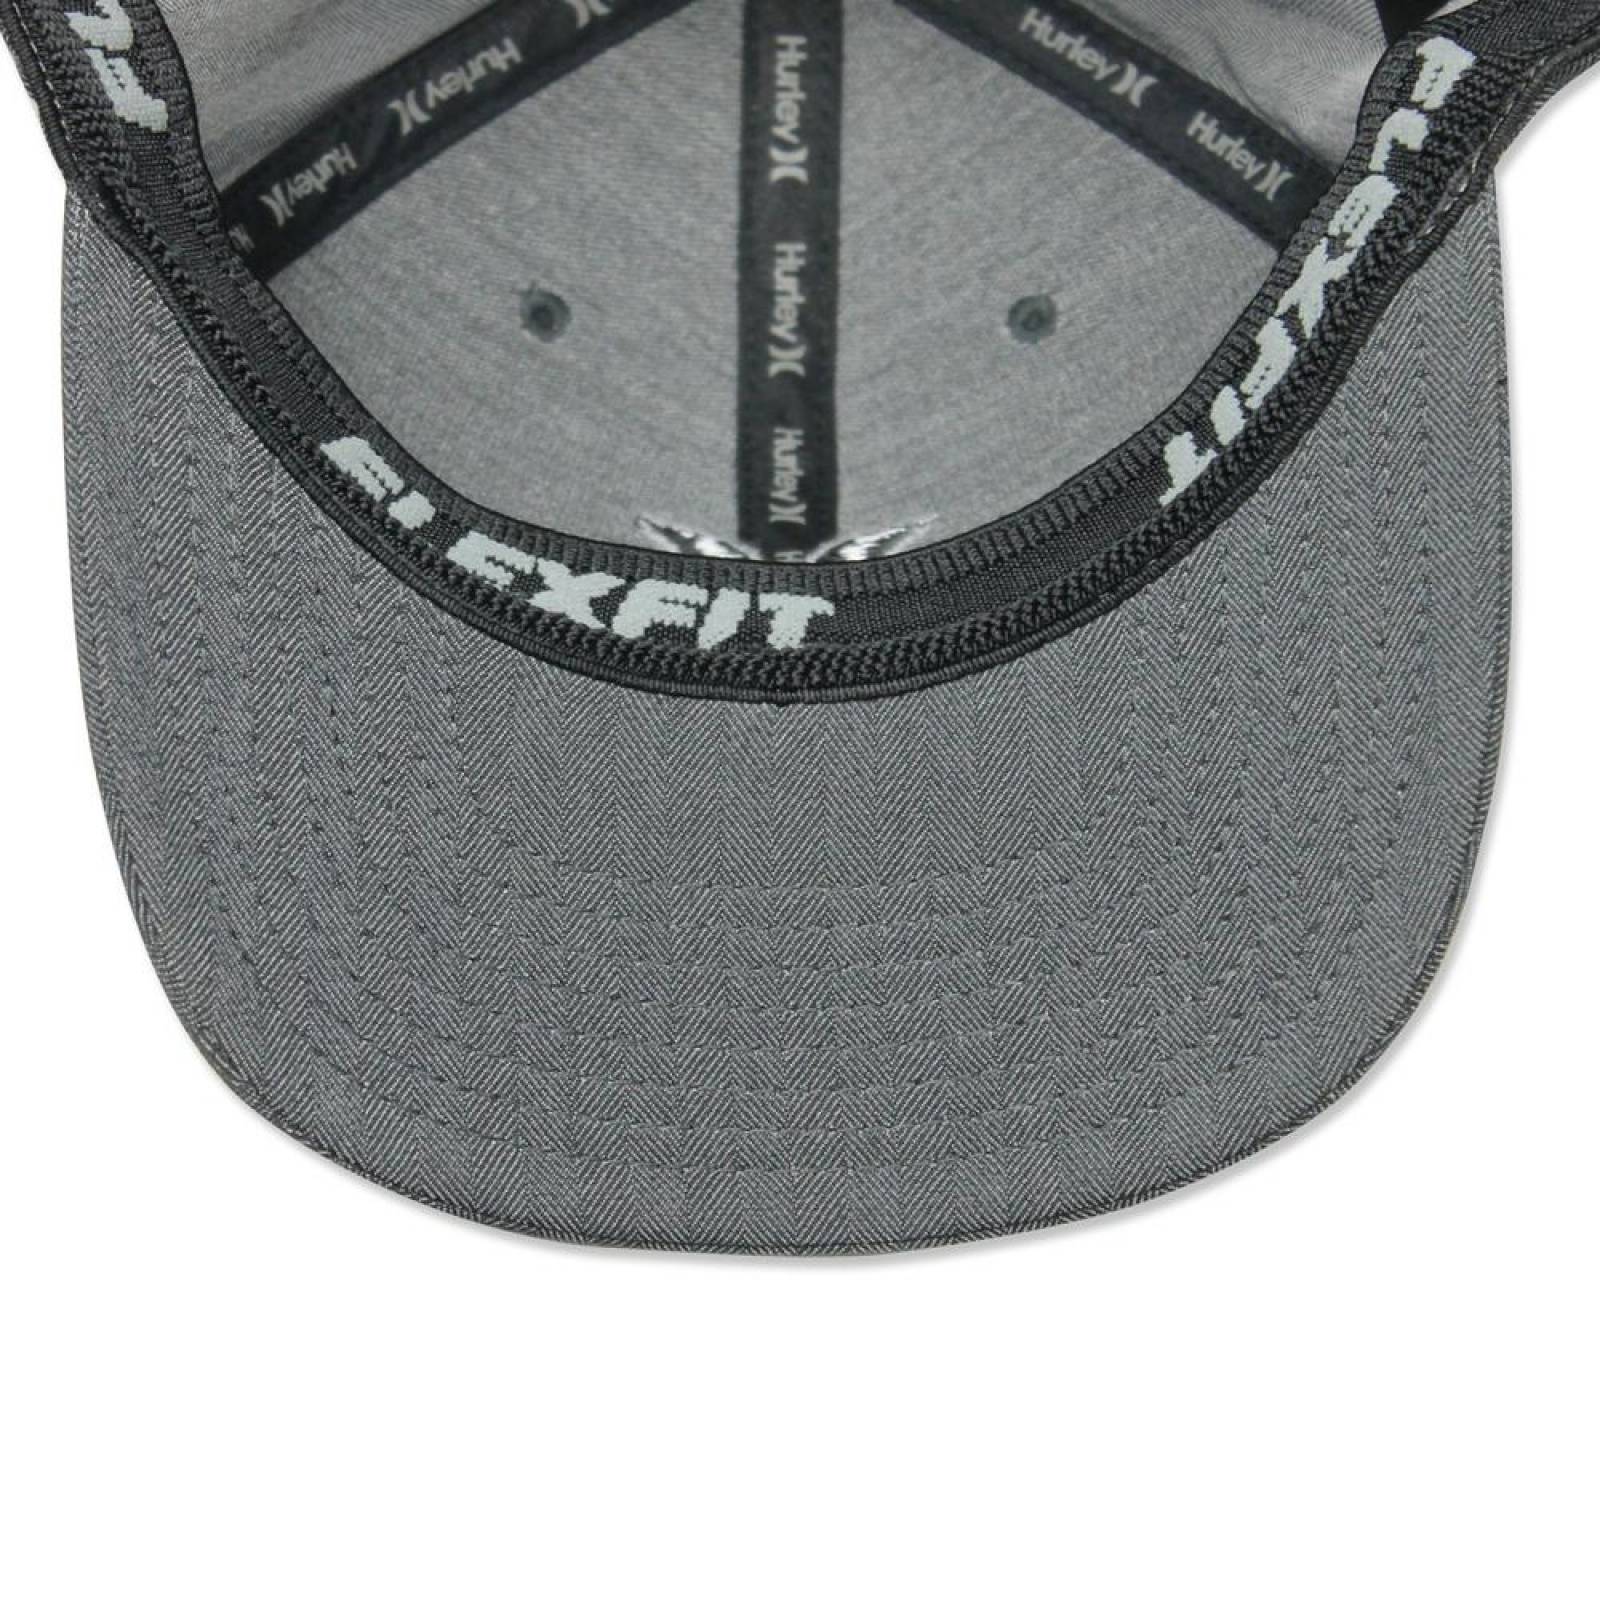 Gorra Hurley Suits Outline Hats Fit Gris/Negro 